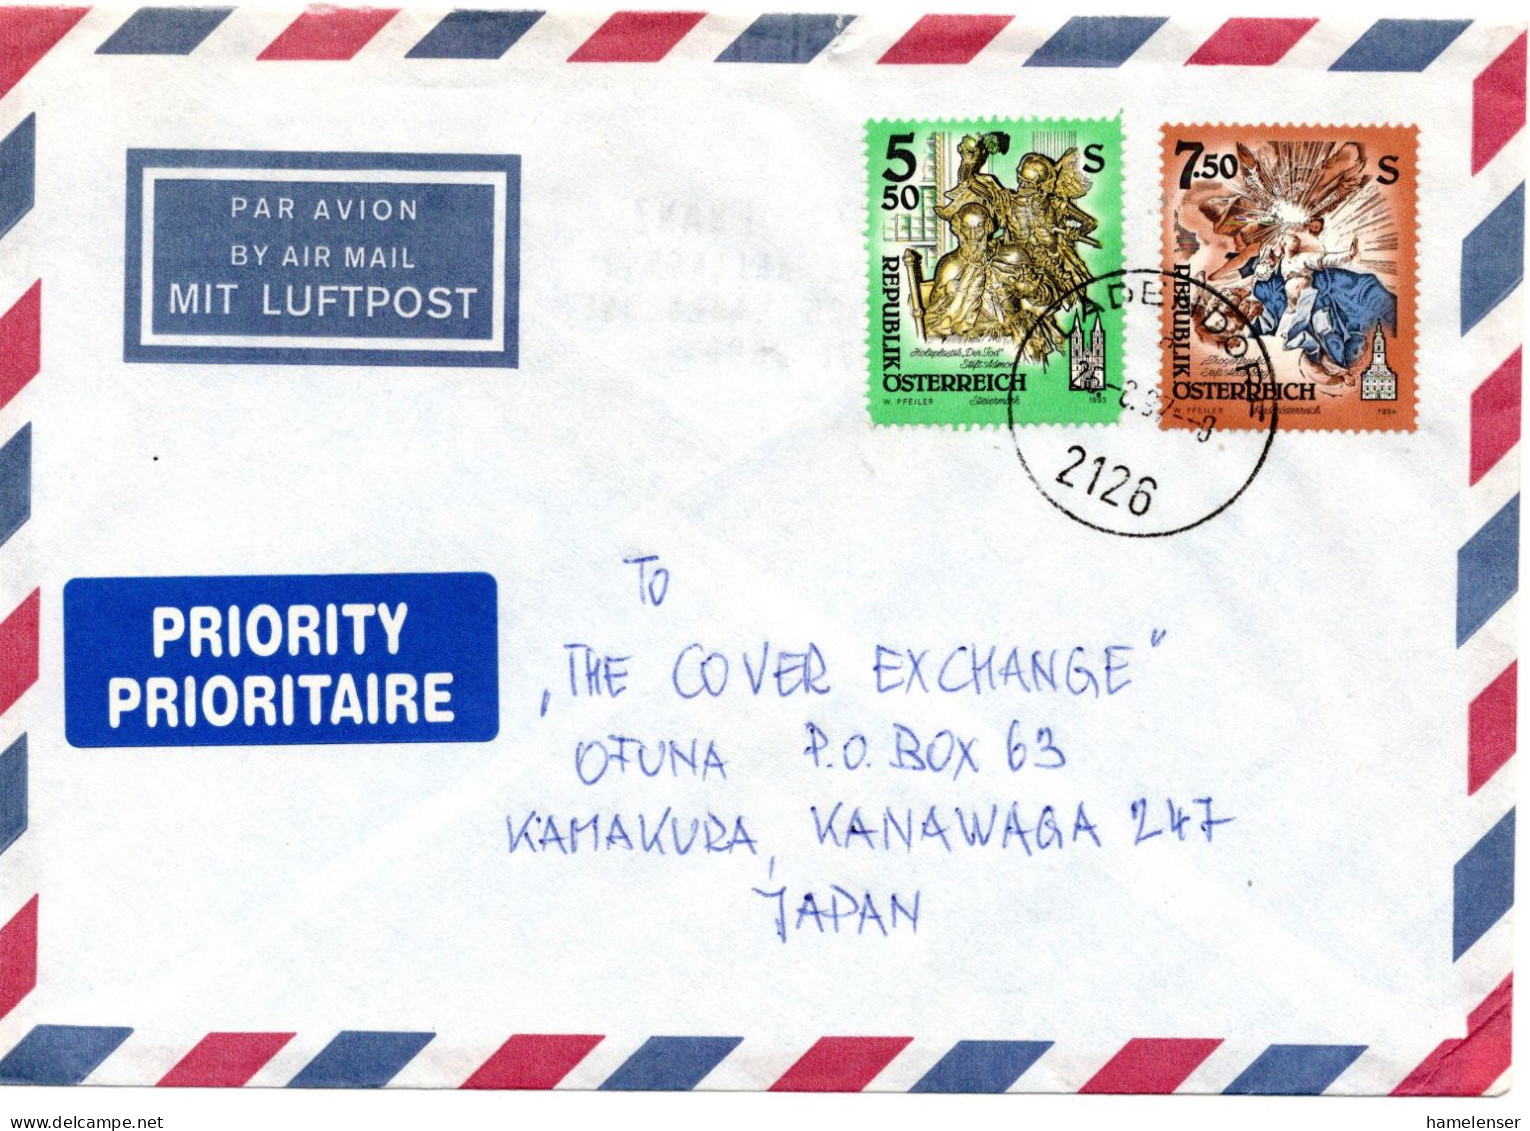 77163 - Österreich - 1997 - S7,50 Sagen MiF A LpBf LADENDORF -> Japan - Briefe U. Dokumente